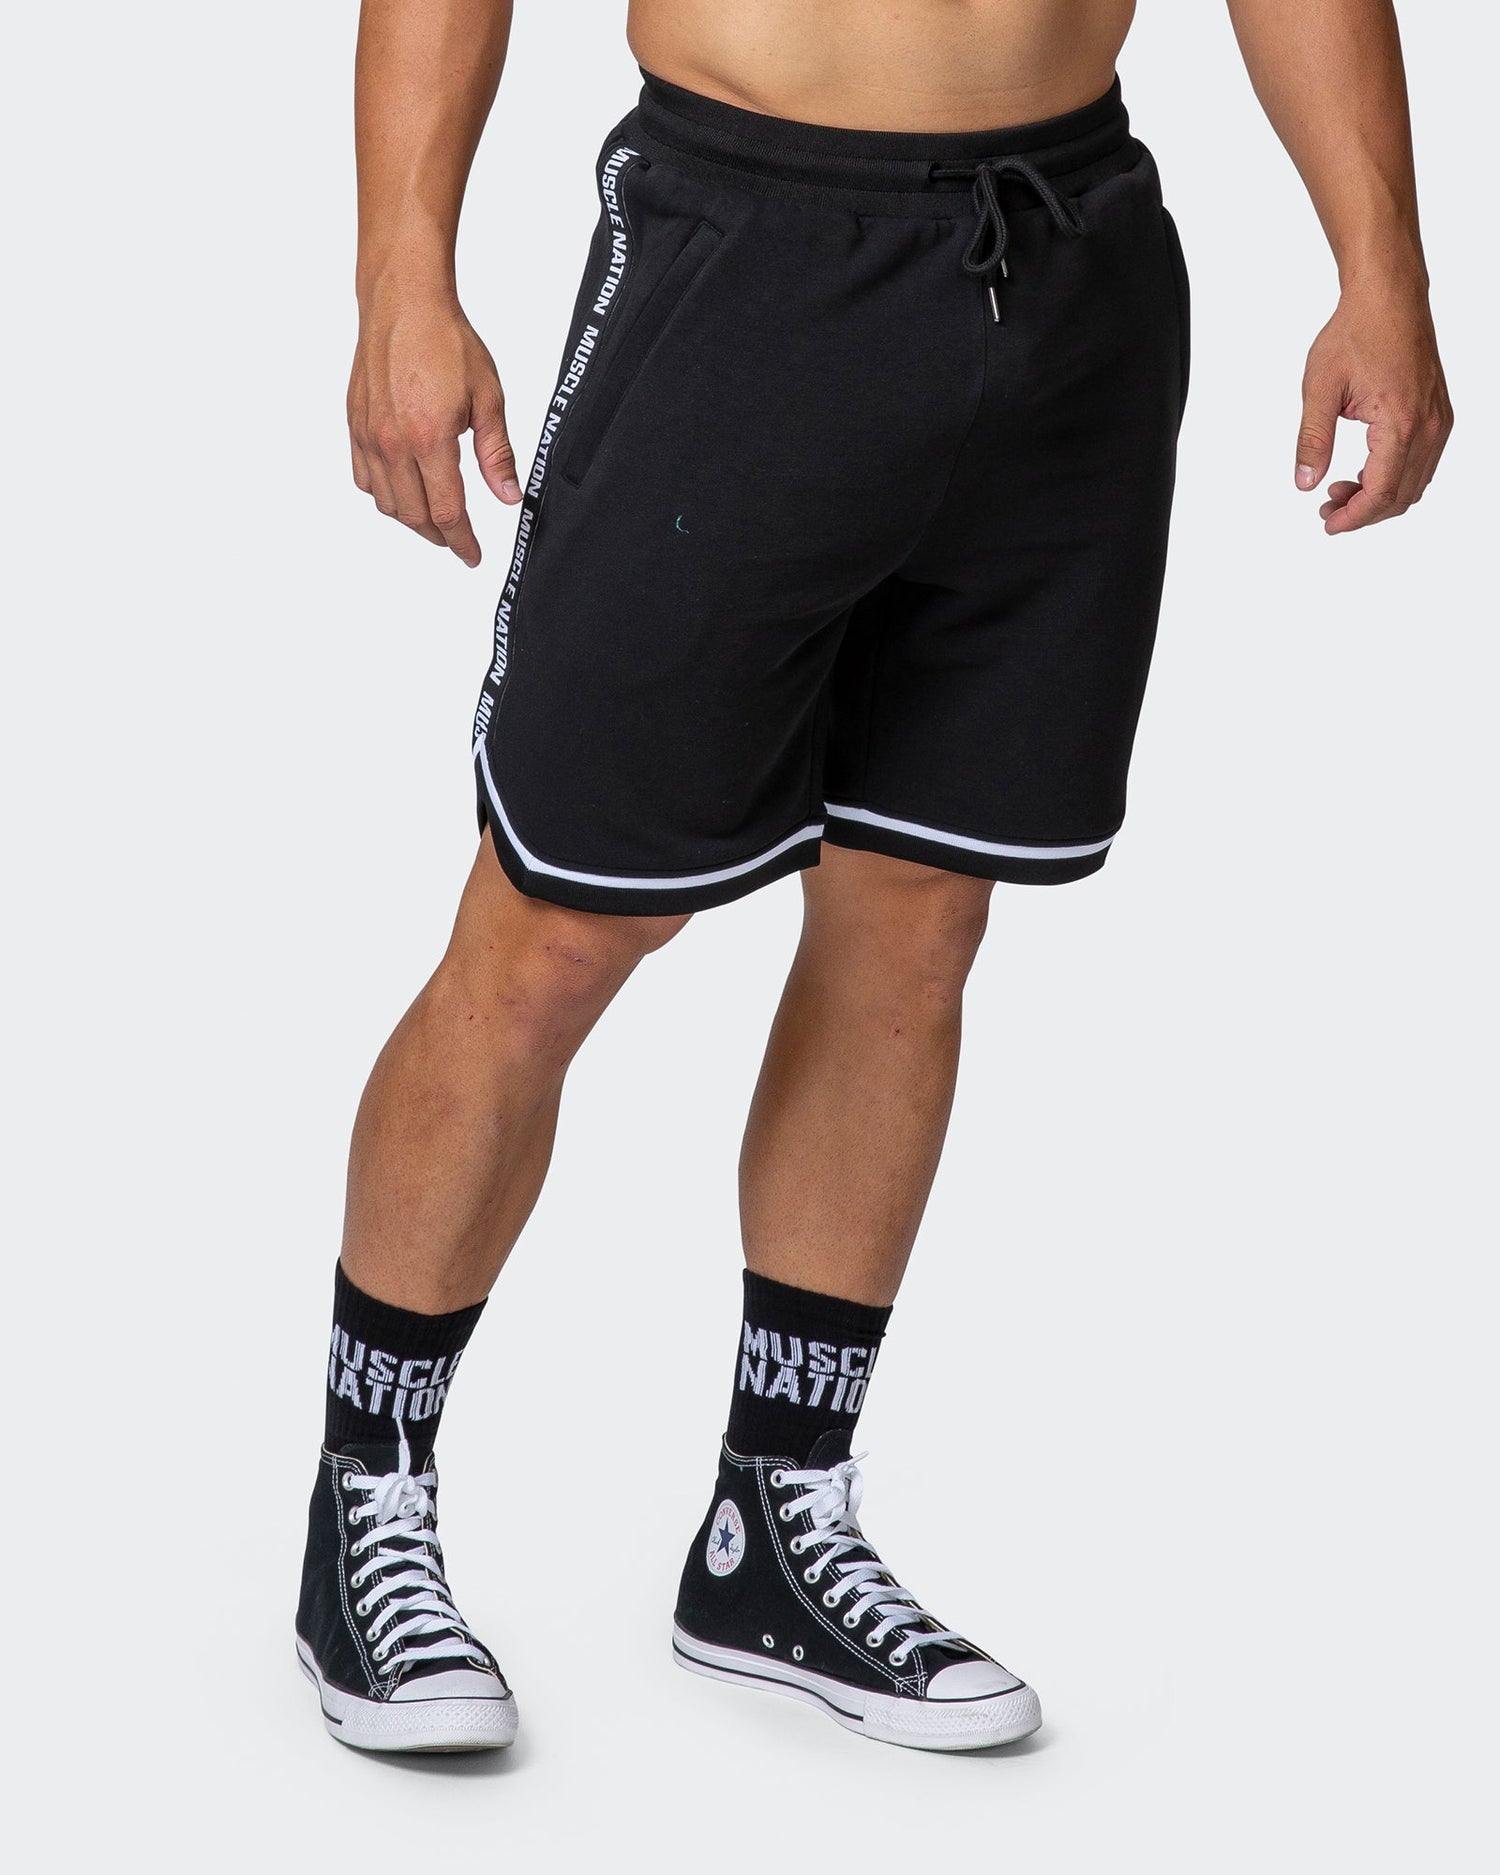 MVP 8" Basketball Shorts - Black